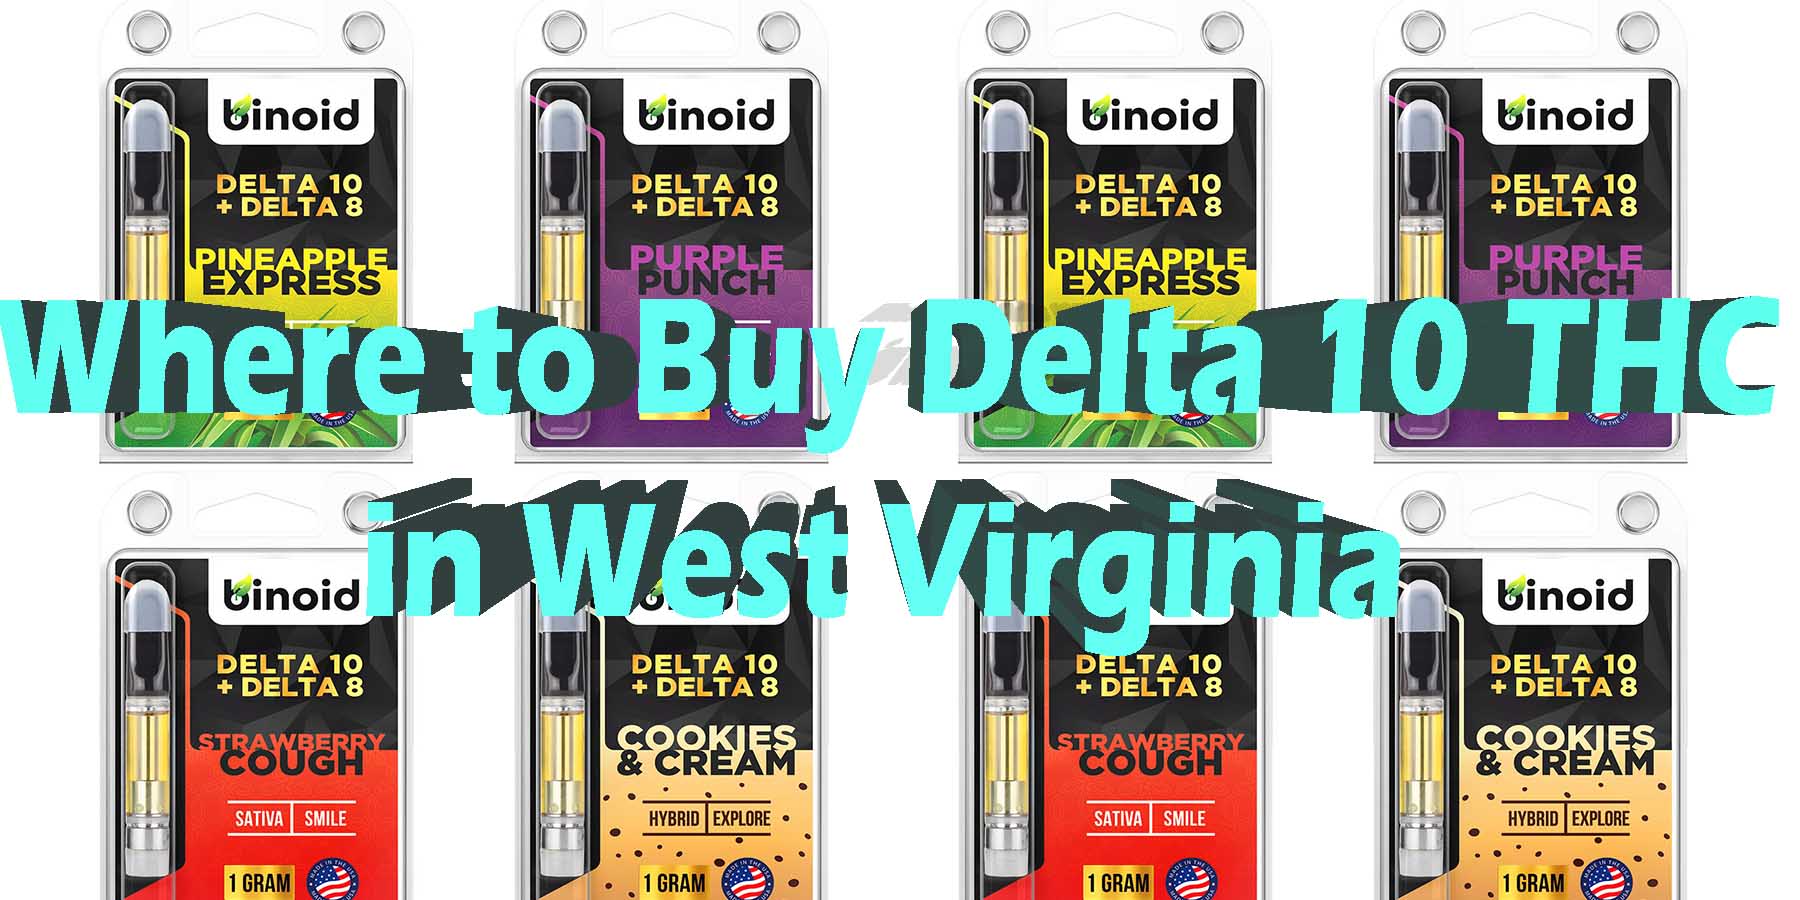 Where to Buy Delta 10 THC in West Virginia Discount For Smoking High Smoke Shop Online Near Me Strongest Binoid Buy Online BestPlace LowestPrice shop Binoid